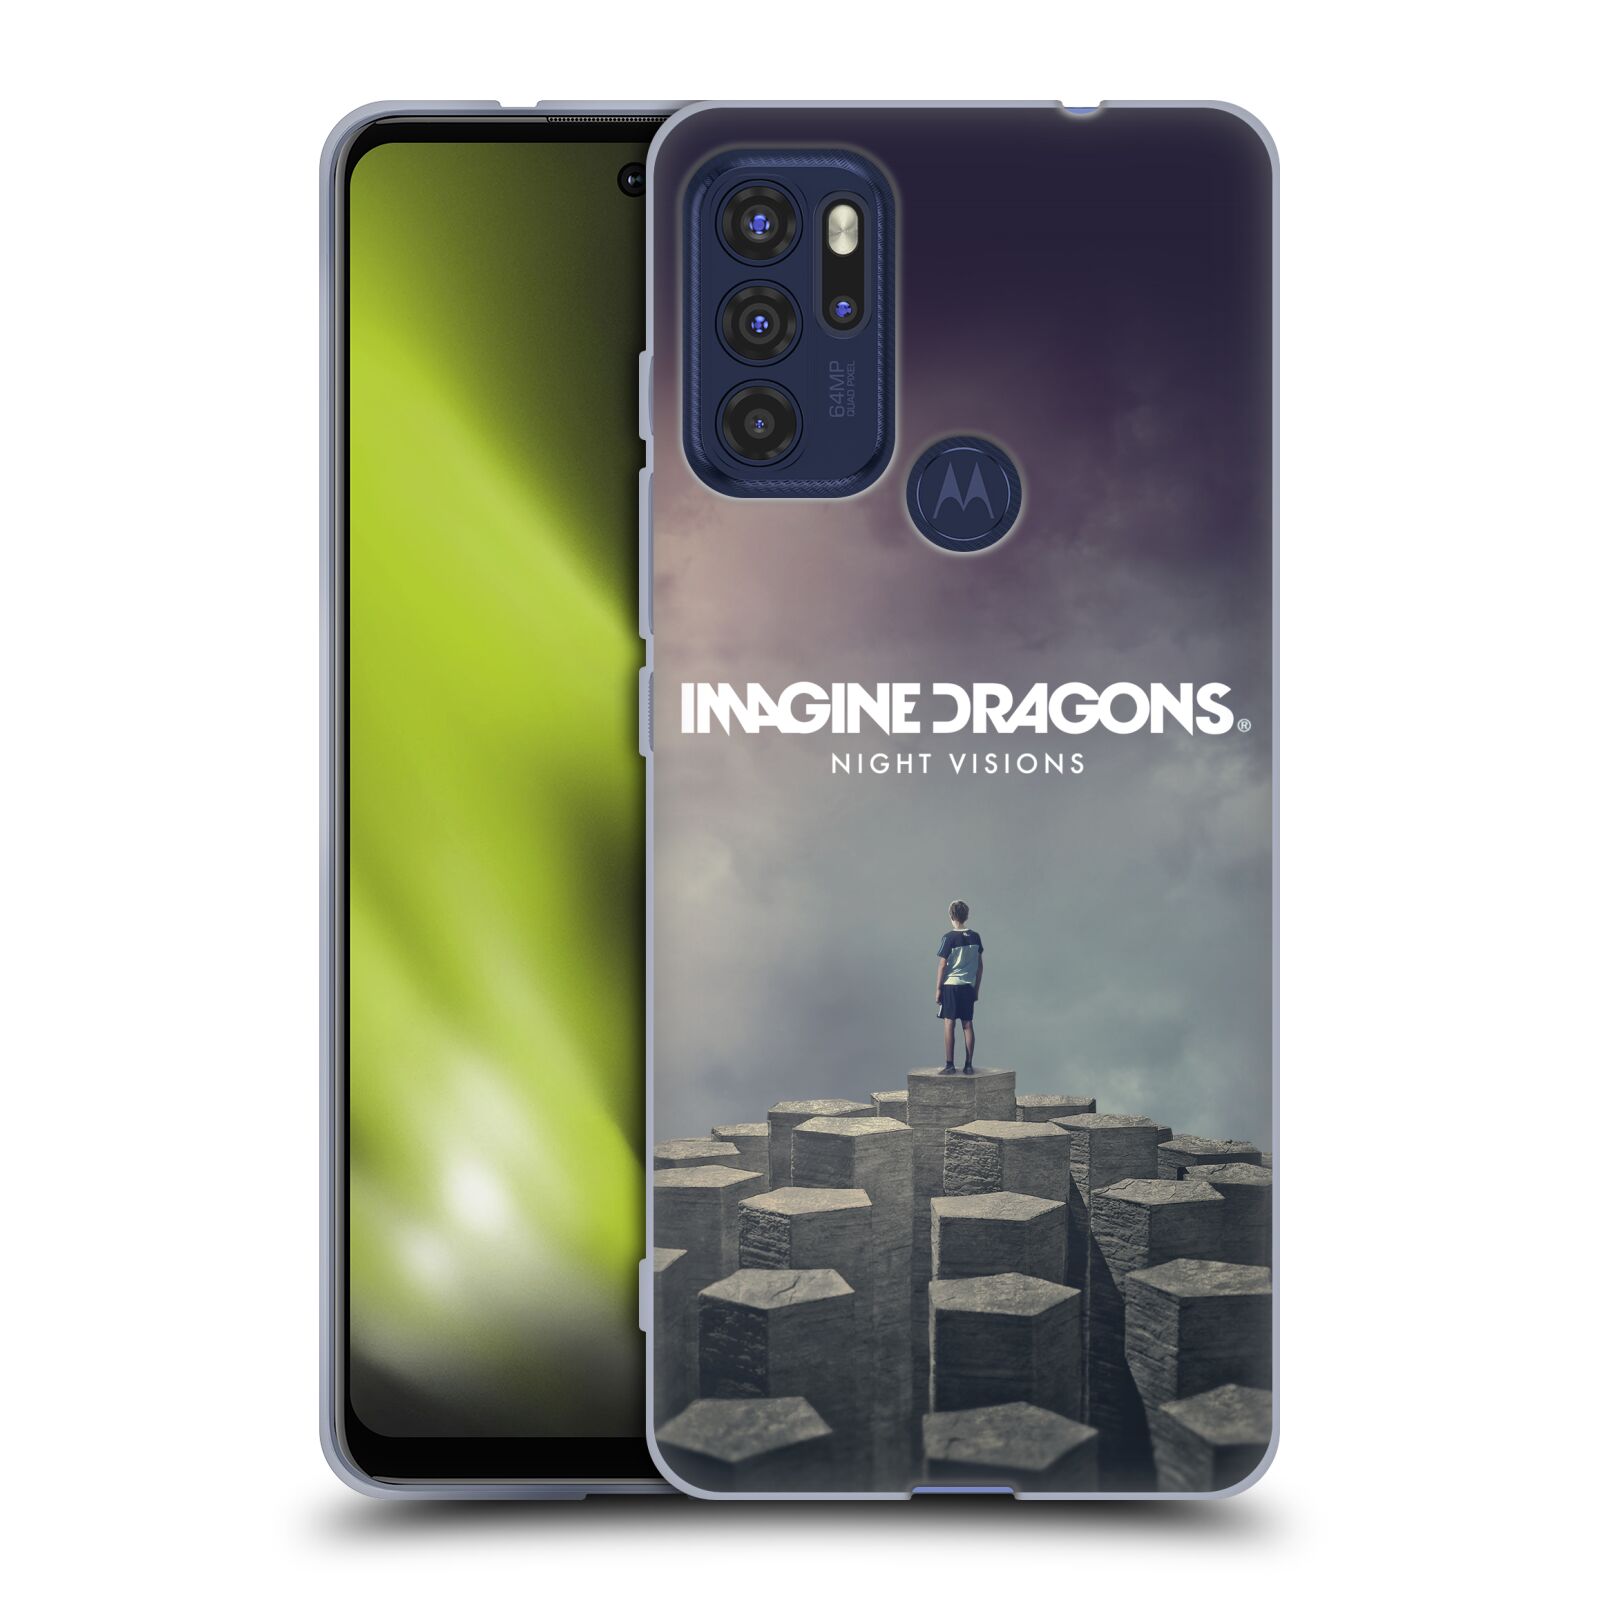 Silikonové pouzdro na mobil Motorola Moto G60s - Imagine Dragons - Night Visions